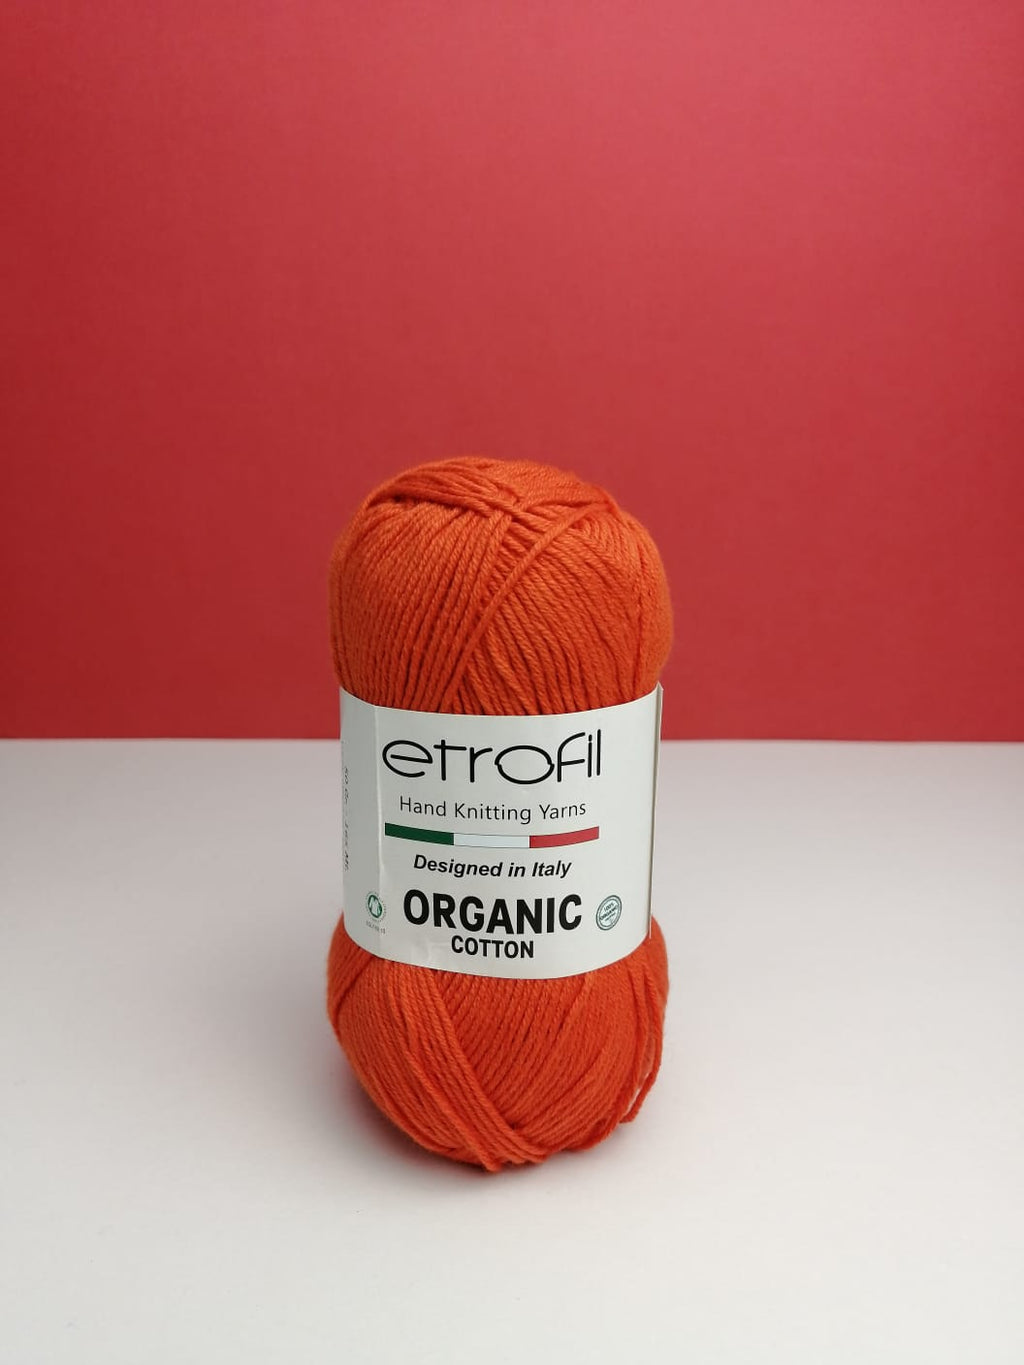 Etrofil Organic Cotton - EB037